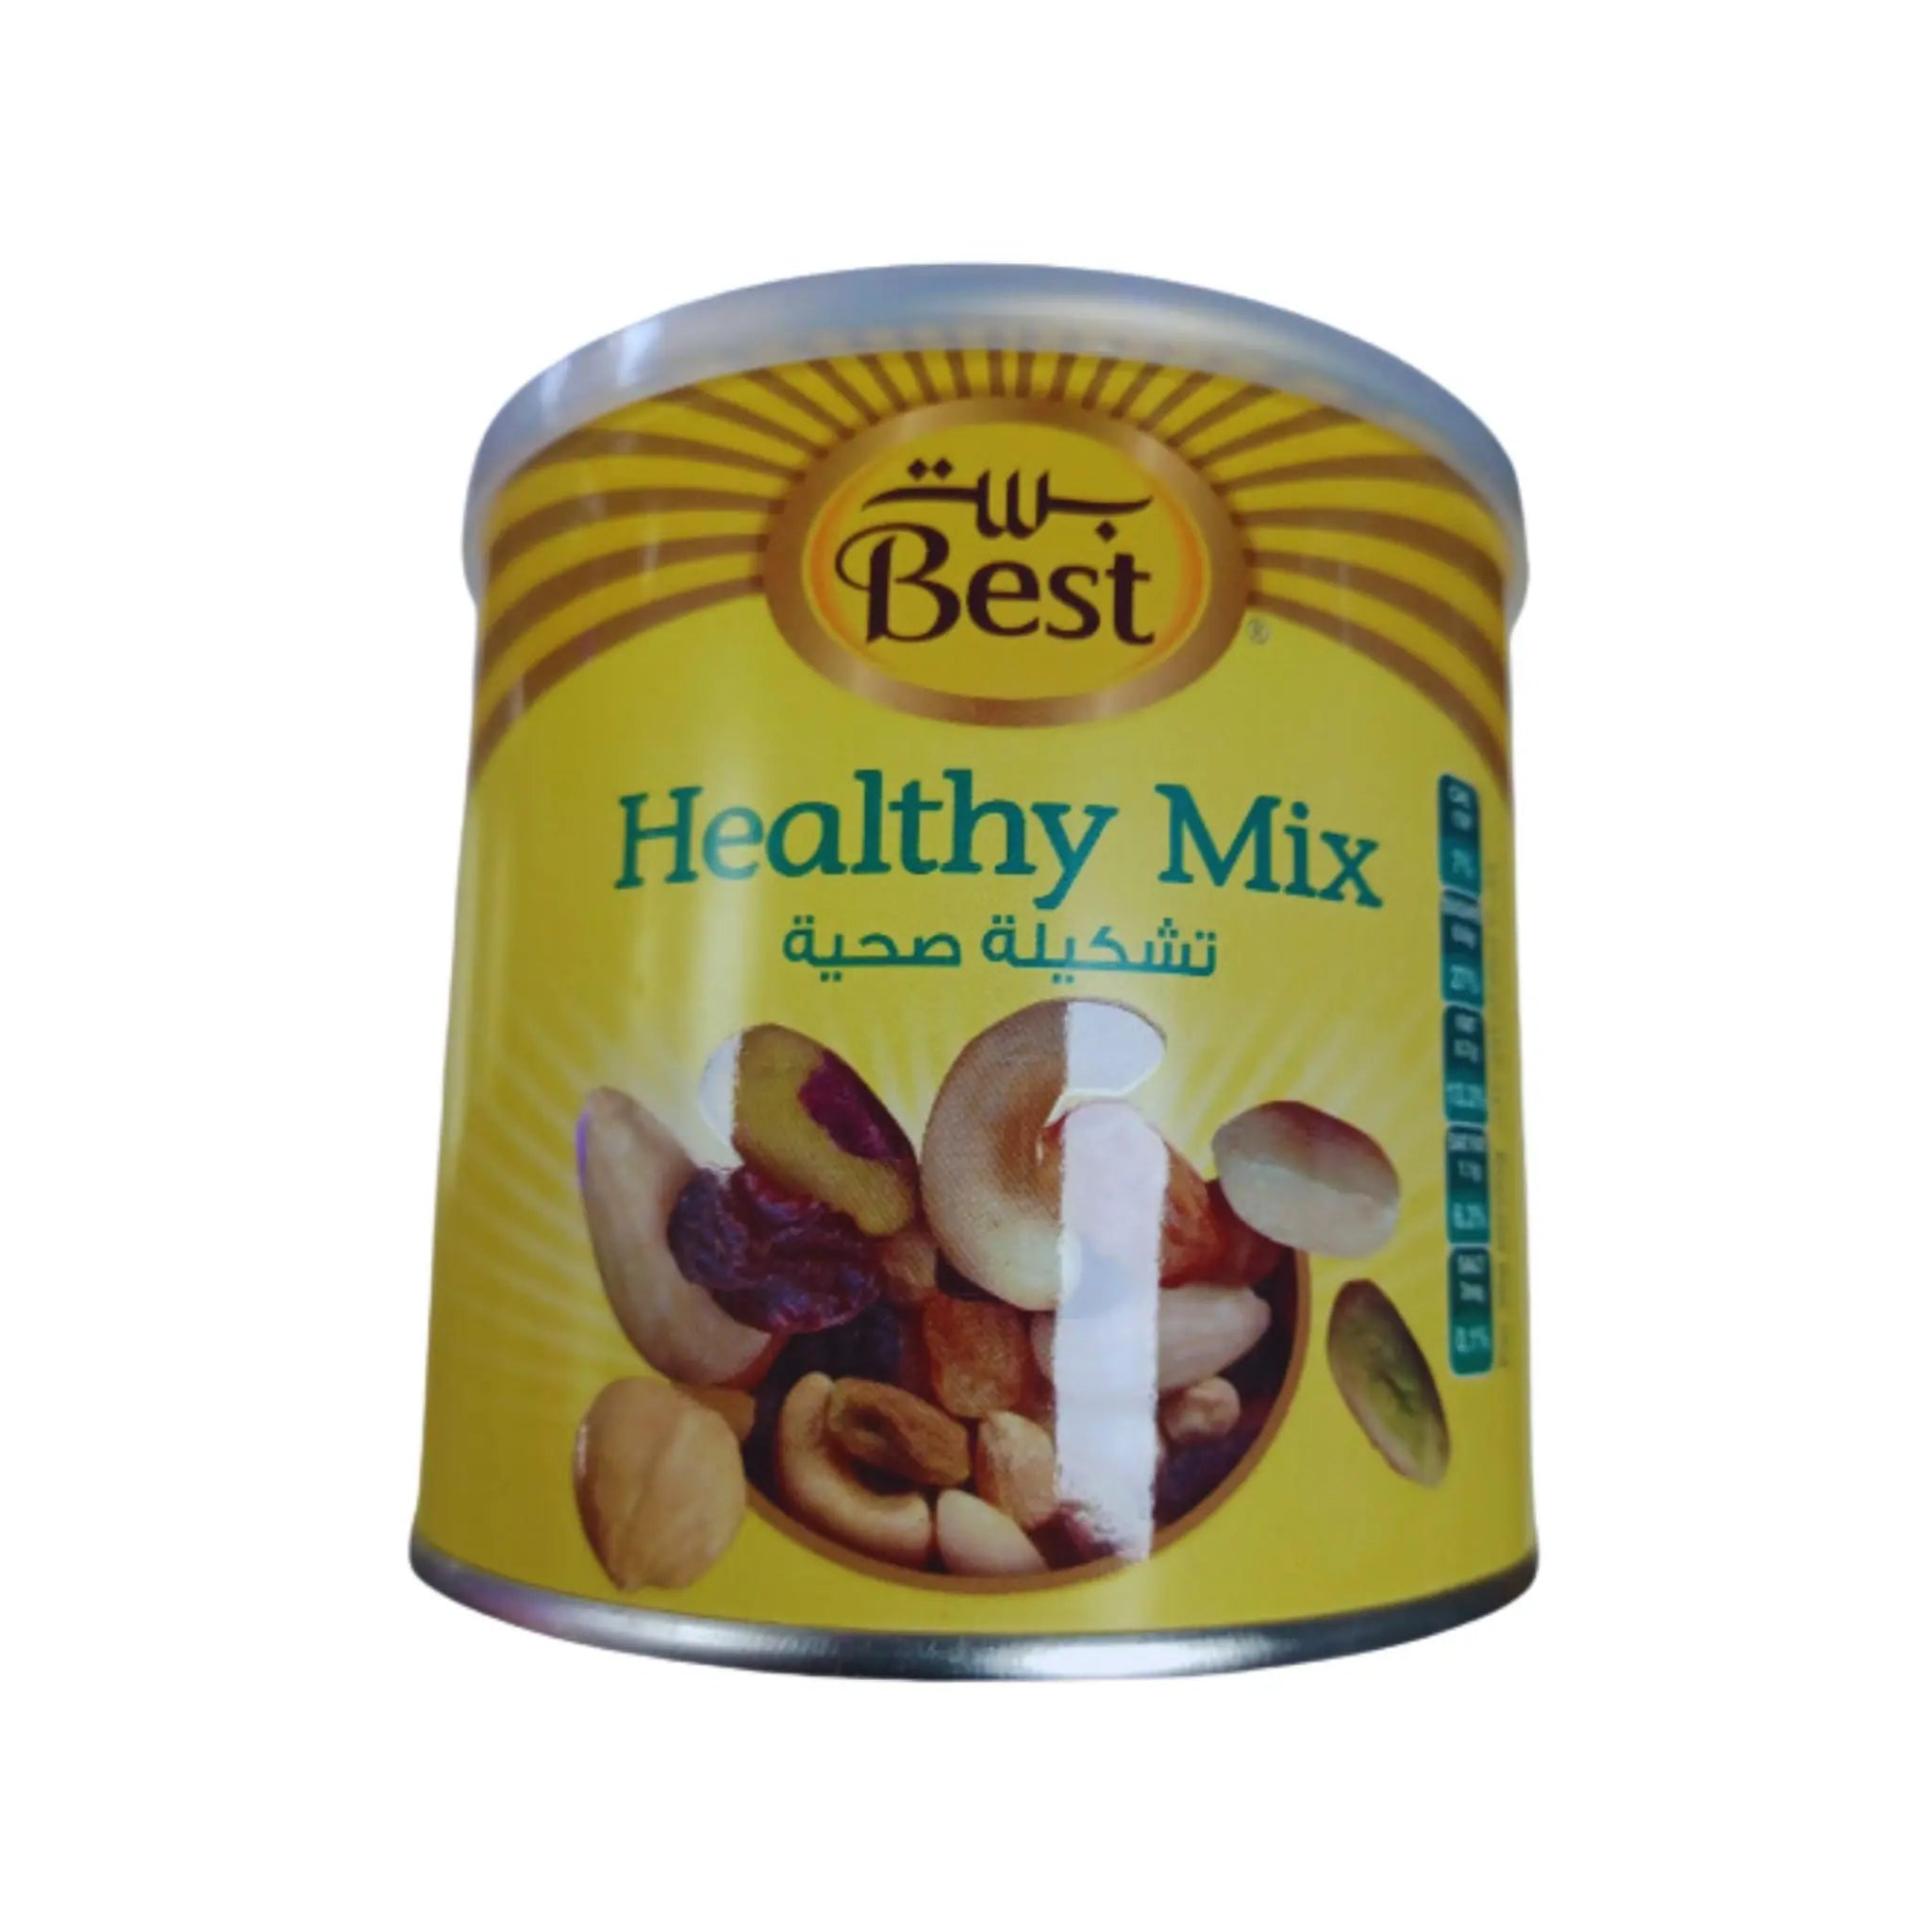 Best Healthy Mix - 12x250g (1 carton) Marino.AE